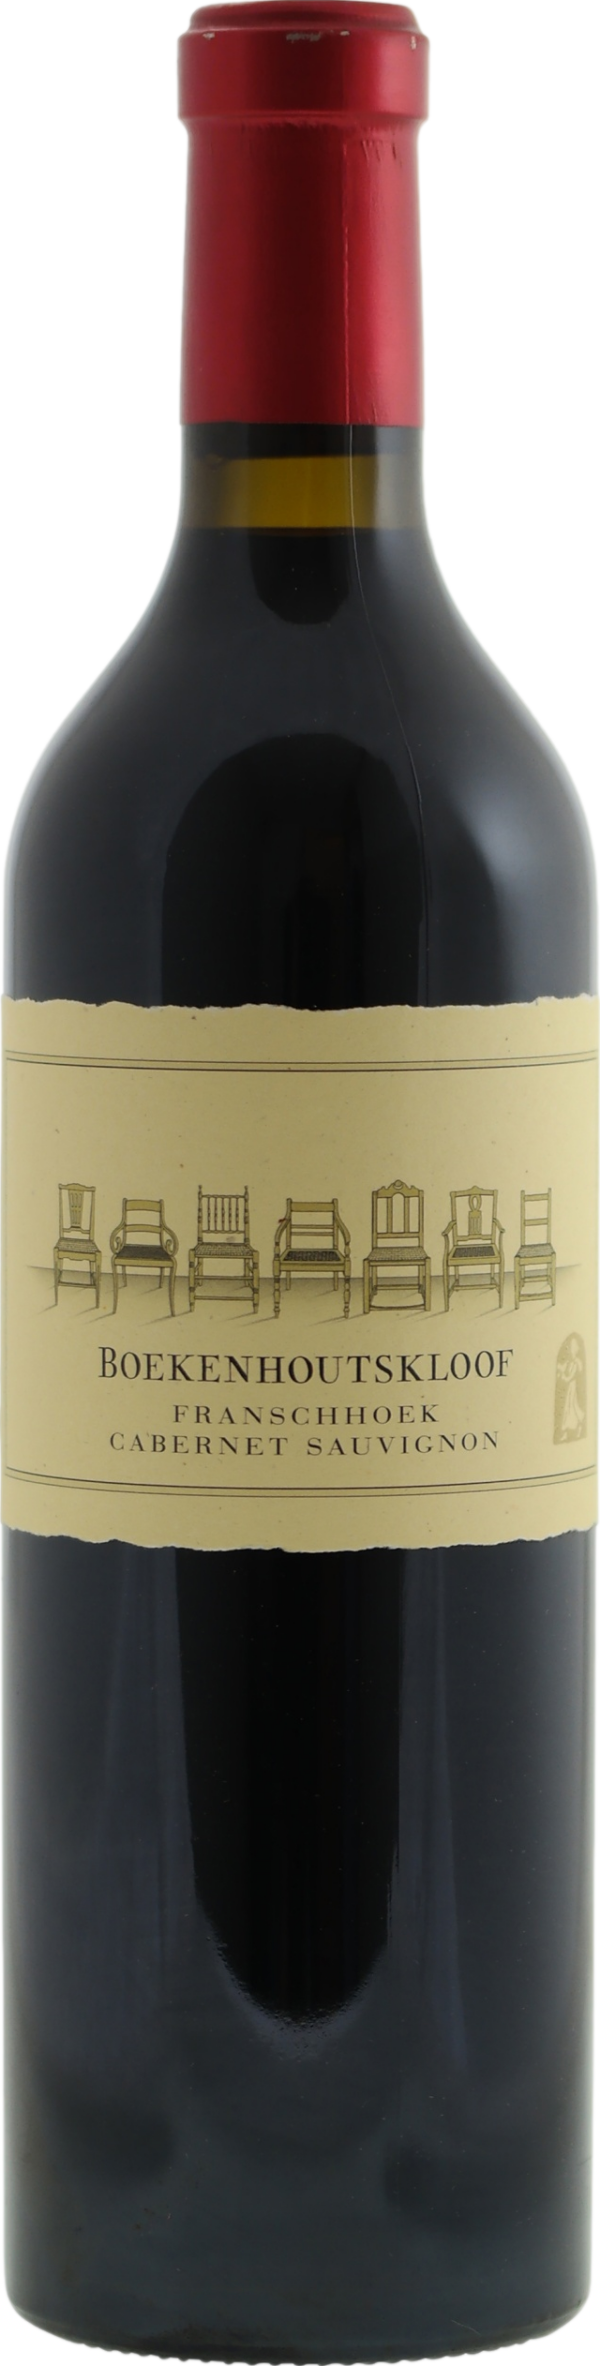 Product image of Boekenhoutskloof Franschhoek Cabernet Sauvignon 2019 from 8wines